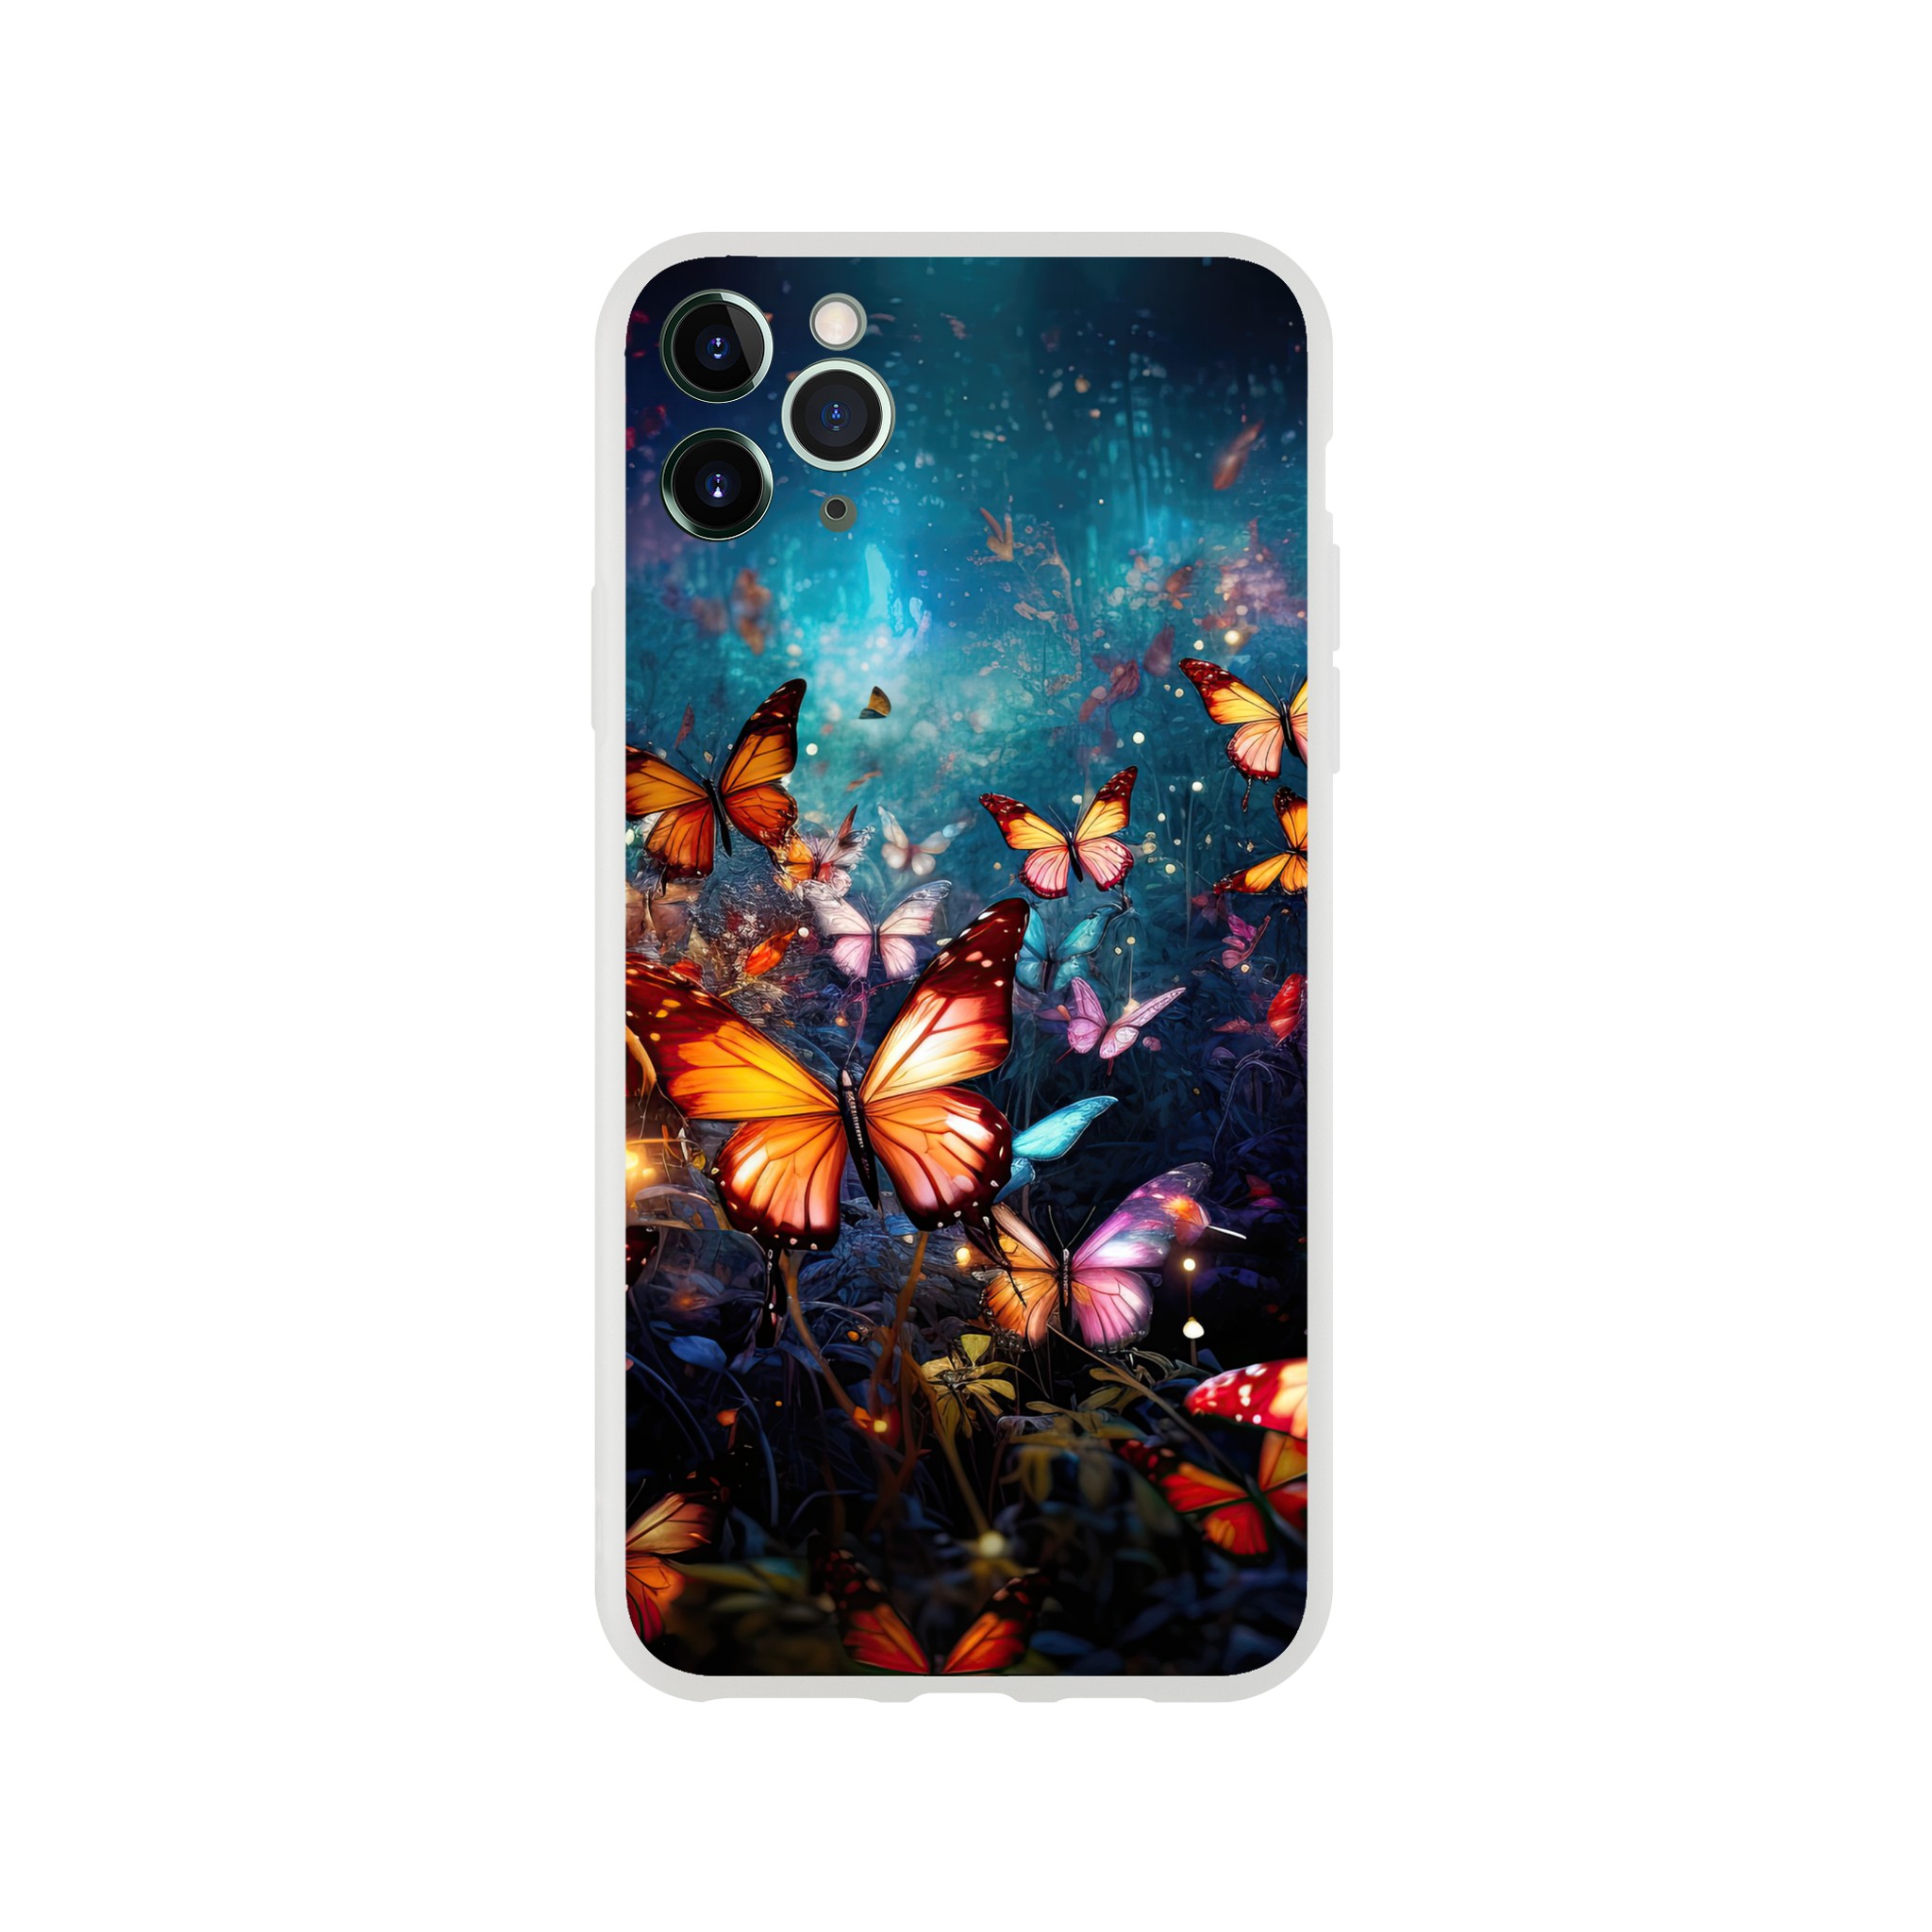 Butterflies of Light Colorful Phone Case – Flexi case, Apple – iPhone 11 Pro Max